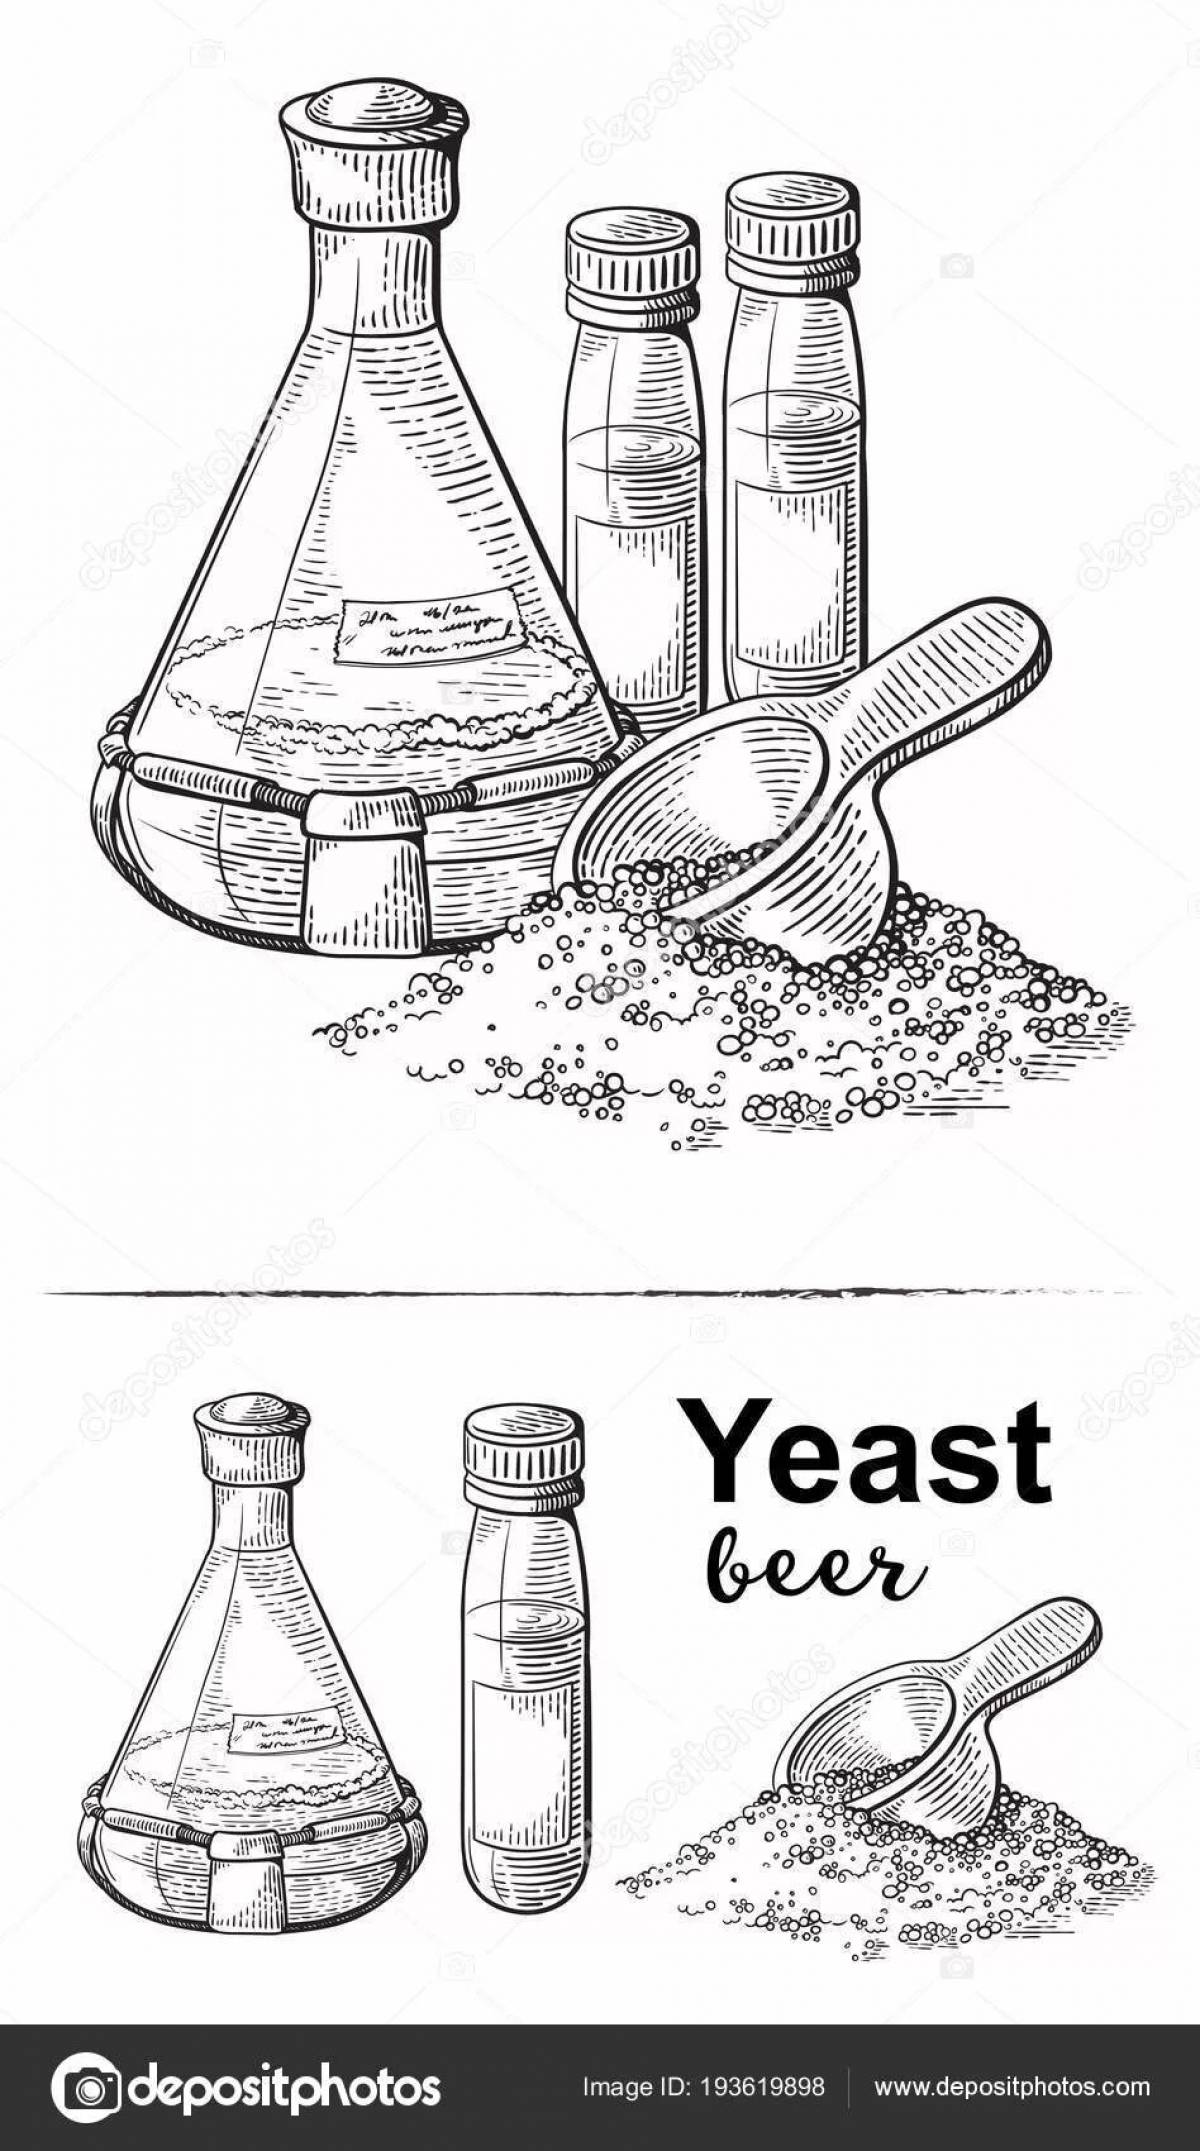 Yeast #4